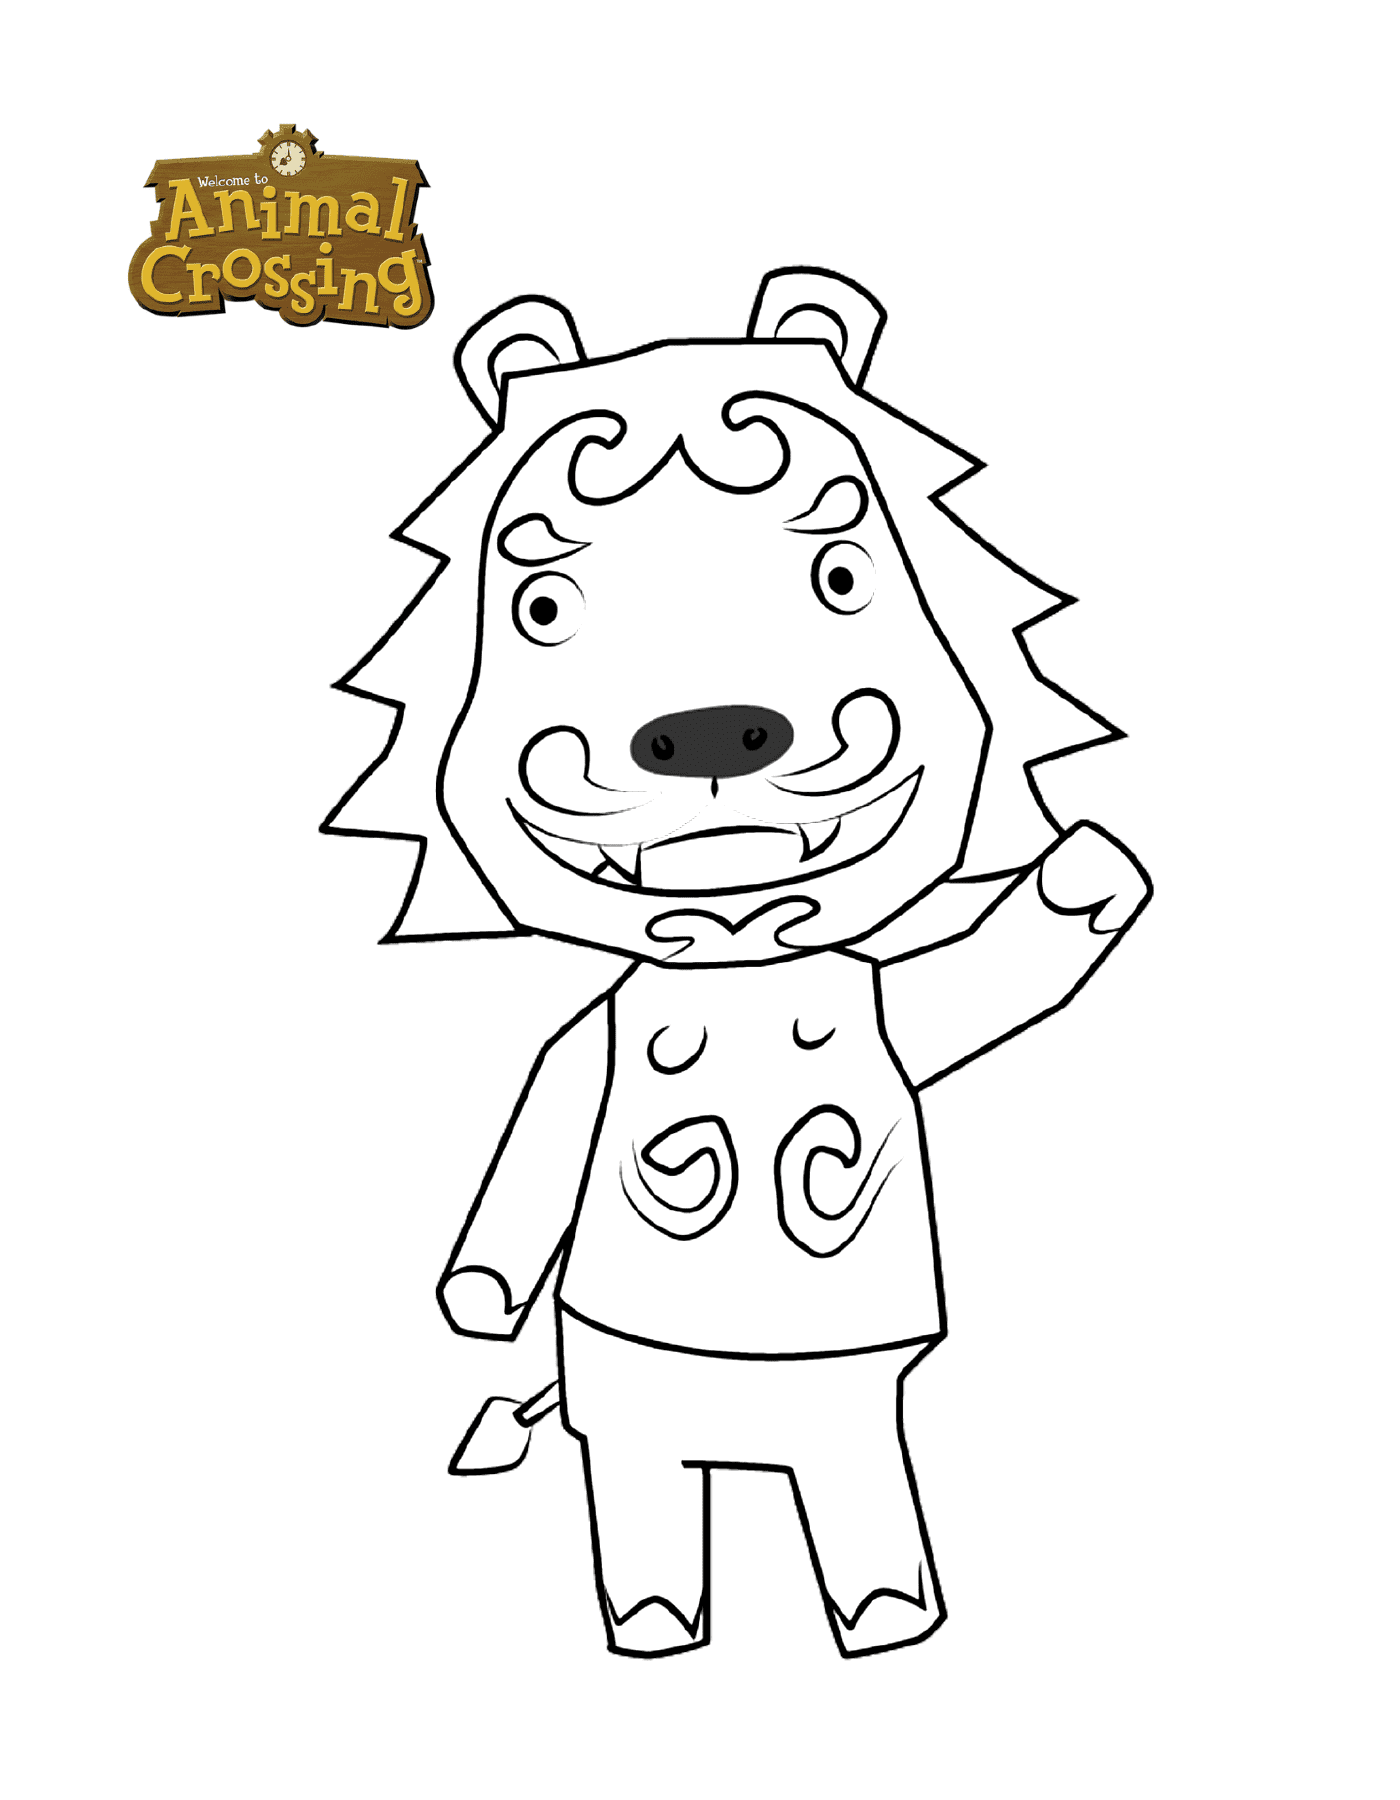   Lion d'Animal Crossing 